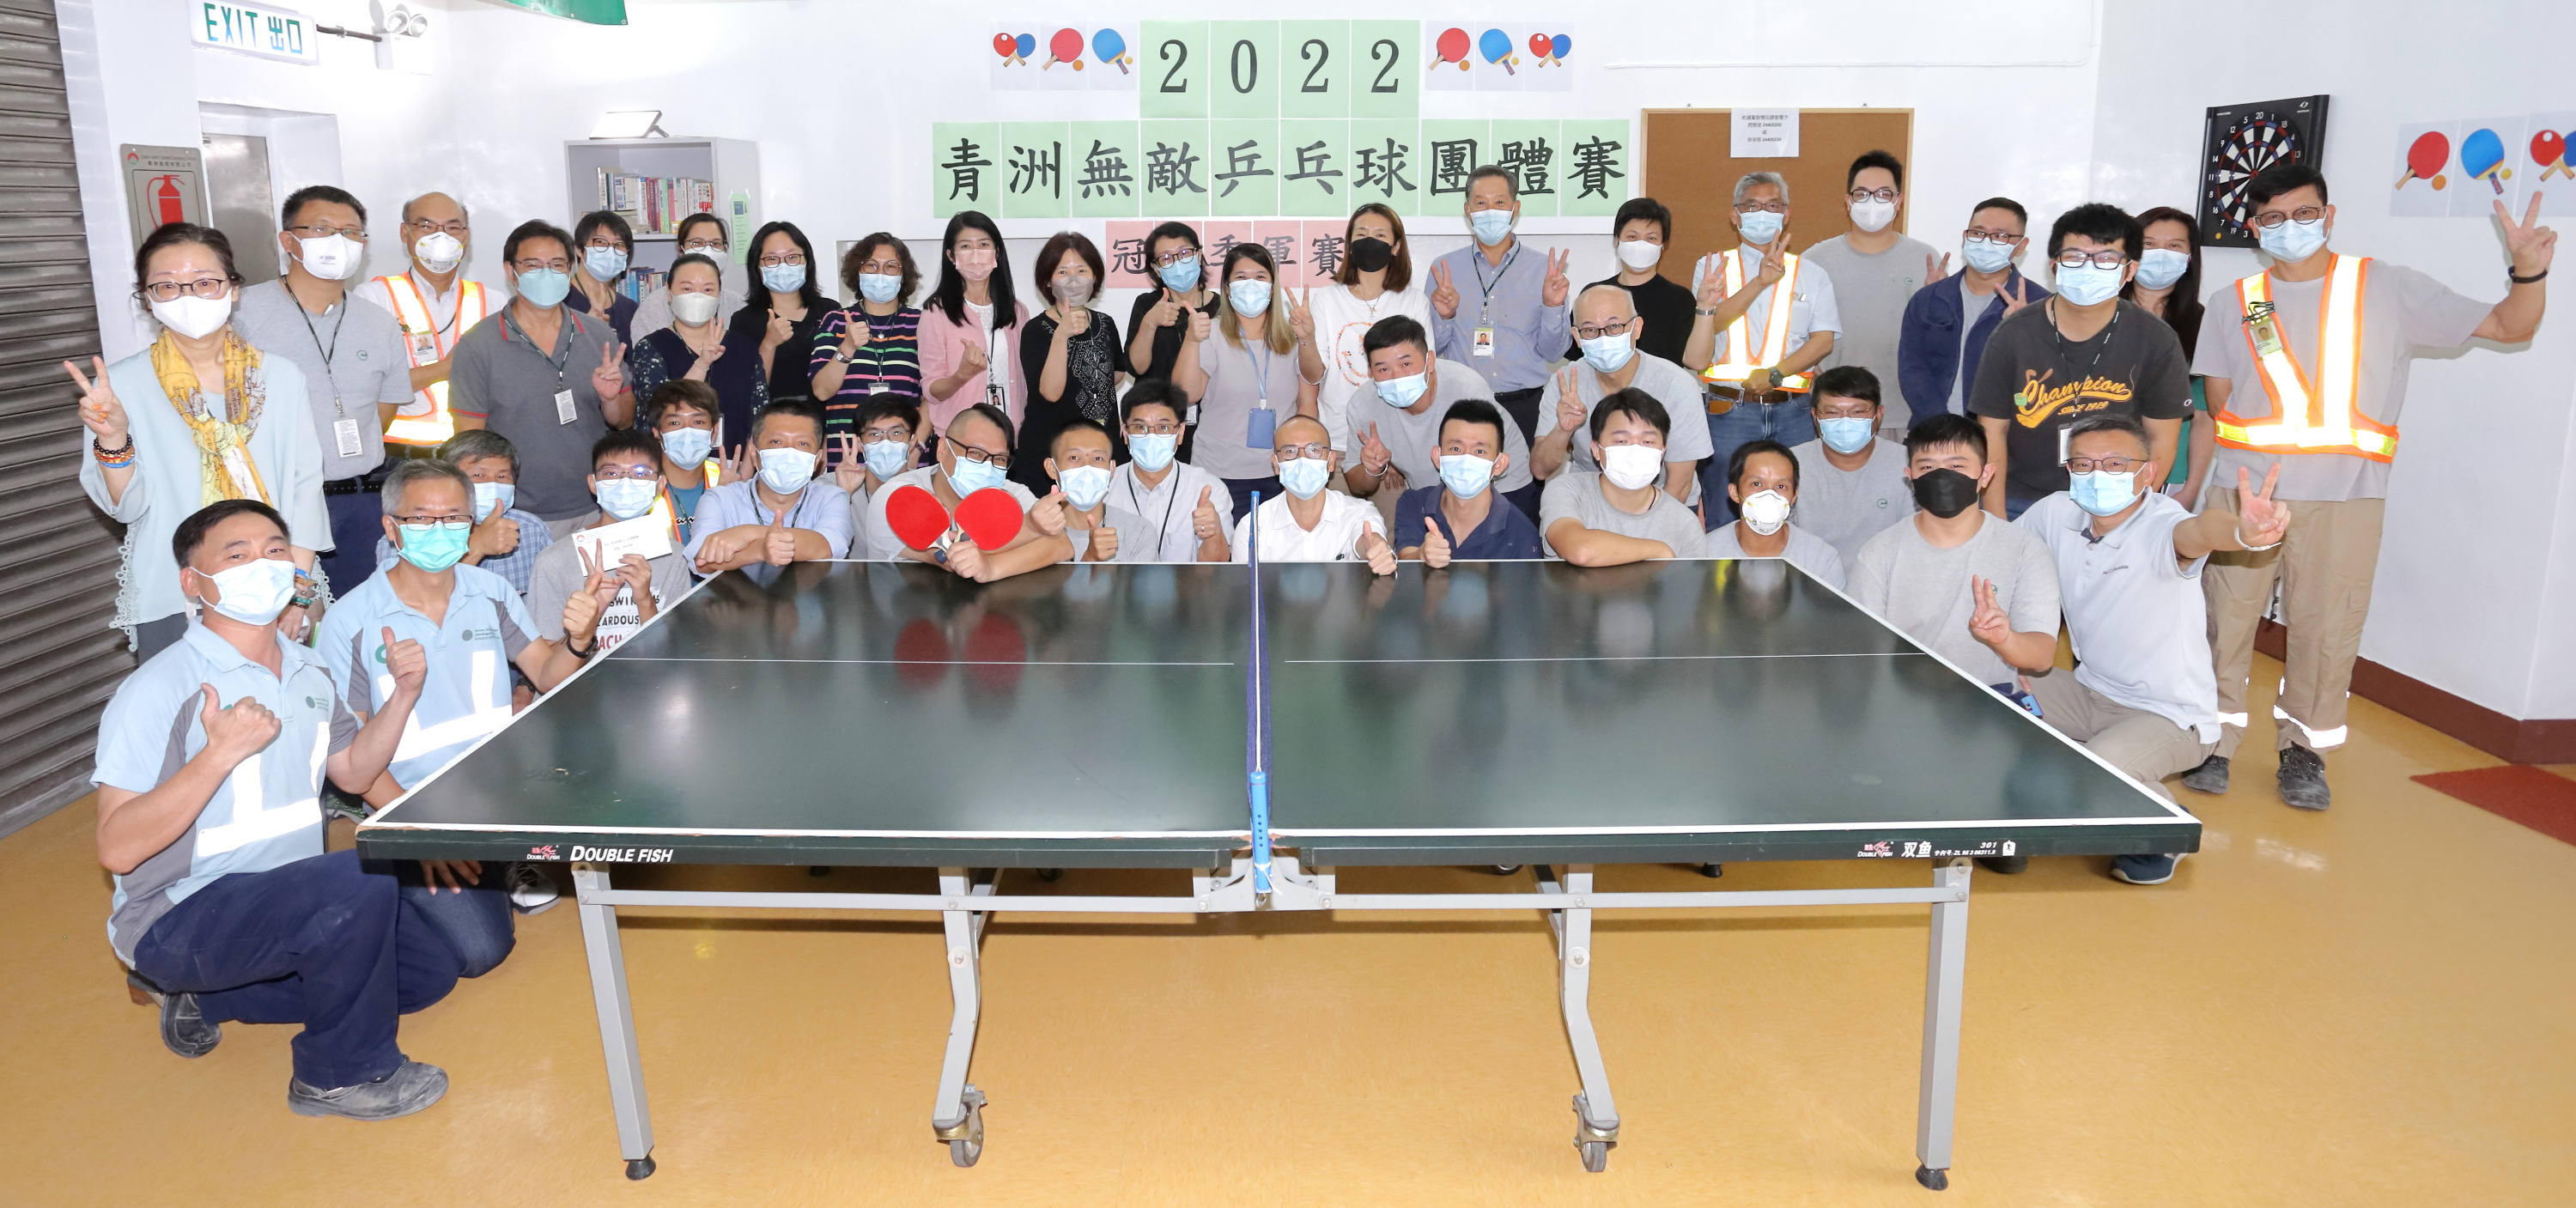 Ping pong match